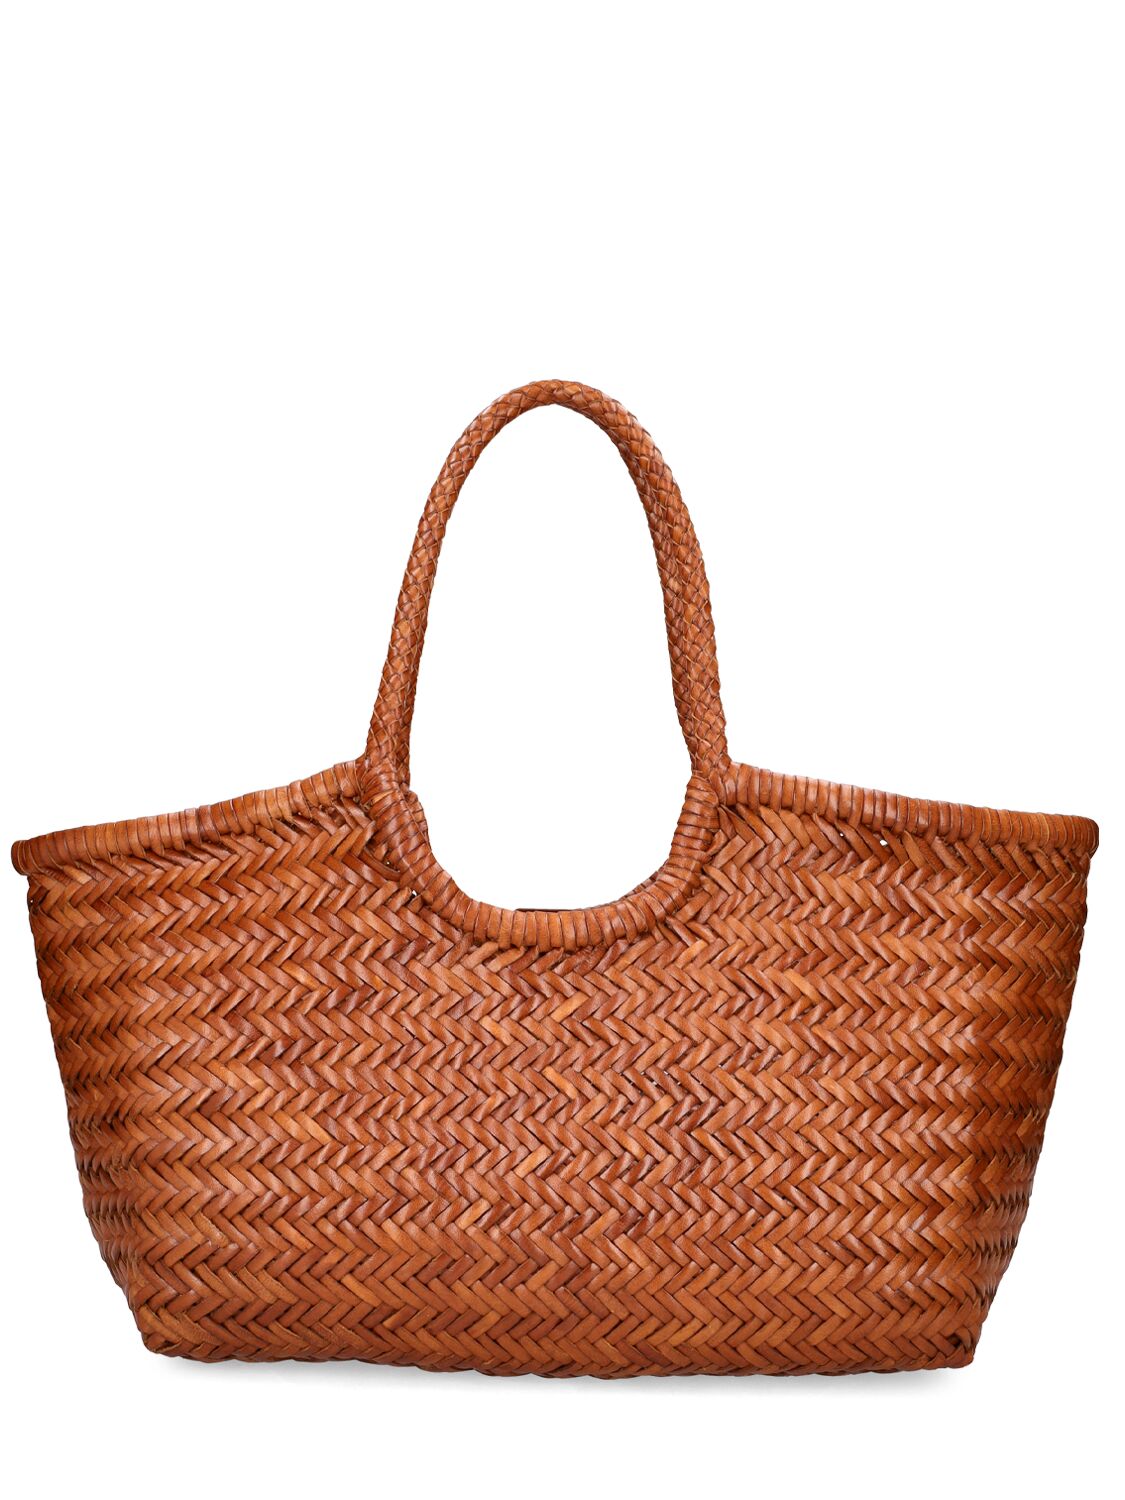 Big Nantucket Woven Leather Basket Bag